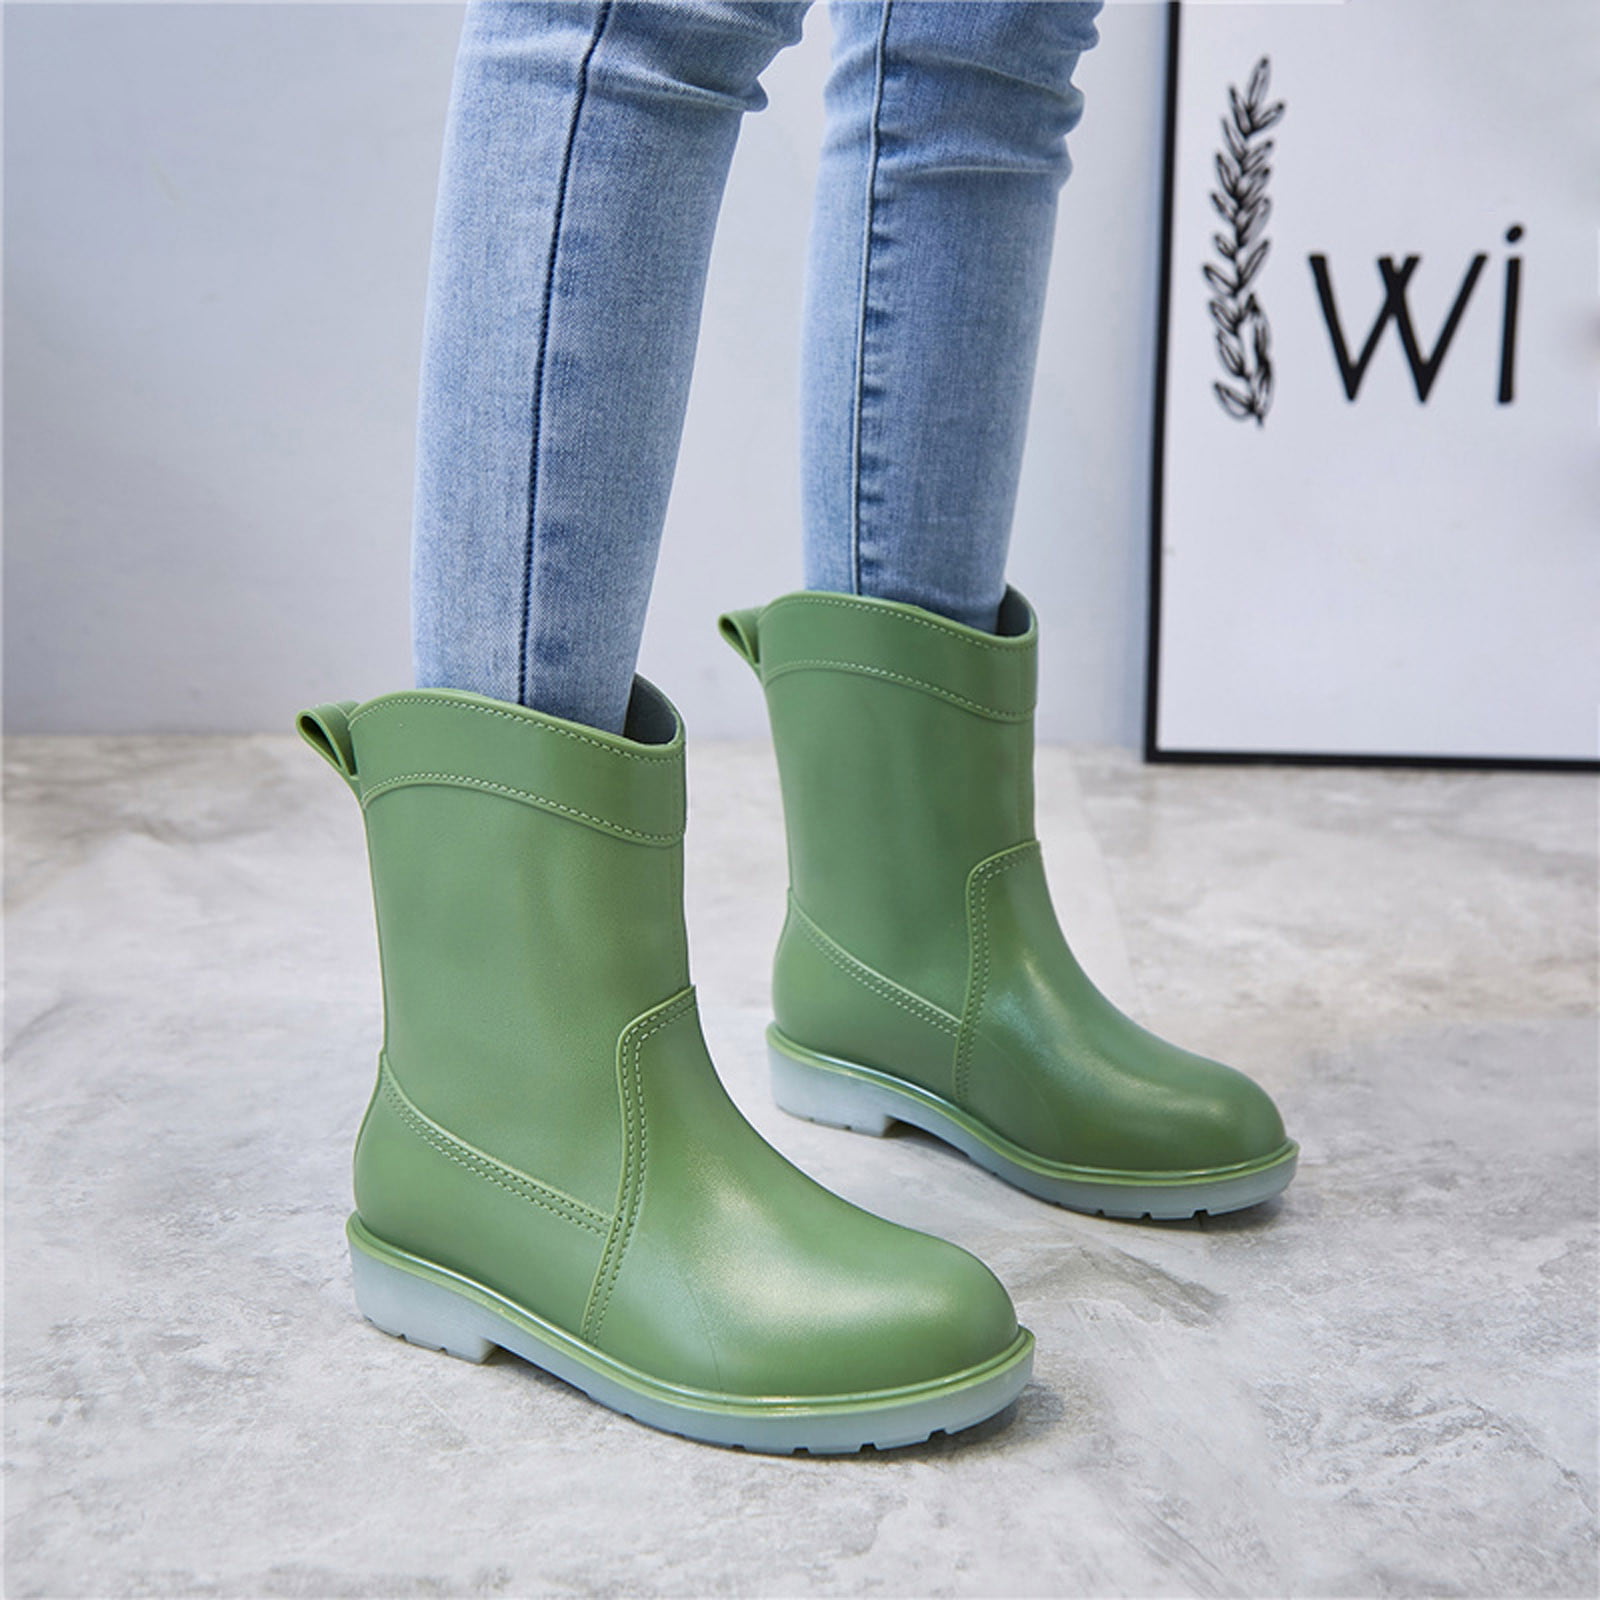 Women Garden Boots Rubbers Rain Shoes US 8 EUR 39 Black Waterproof NEW UK 6 